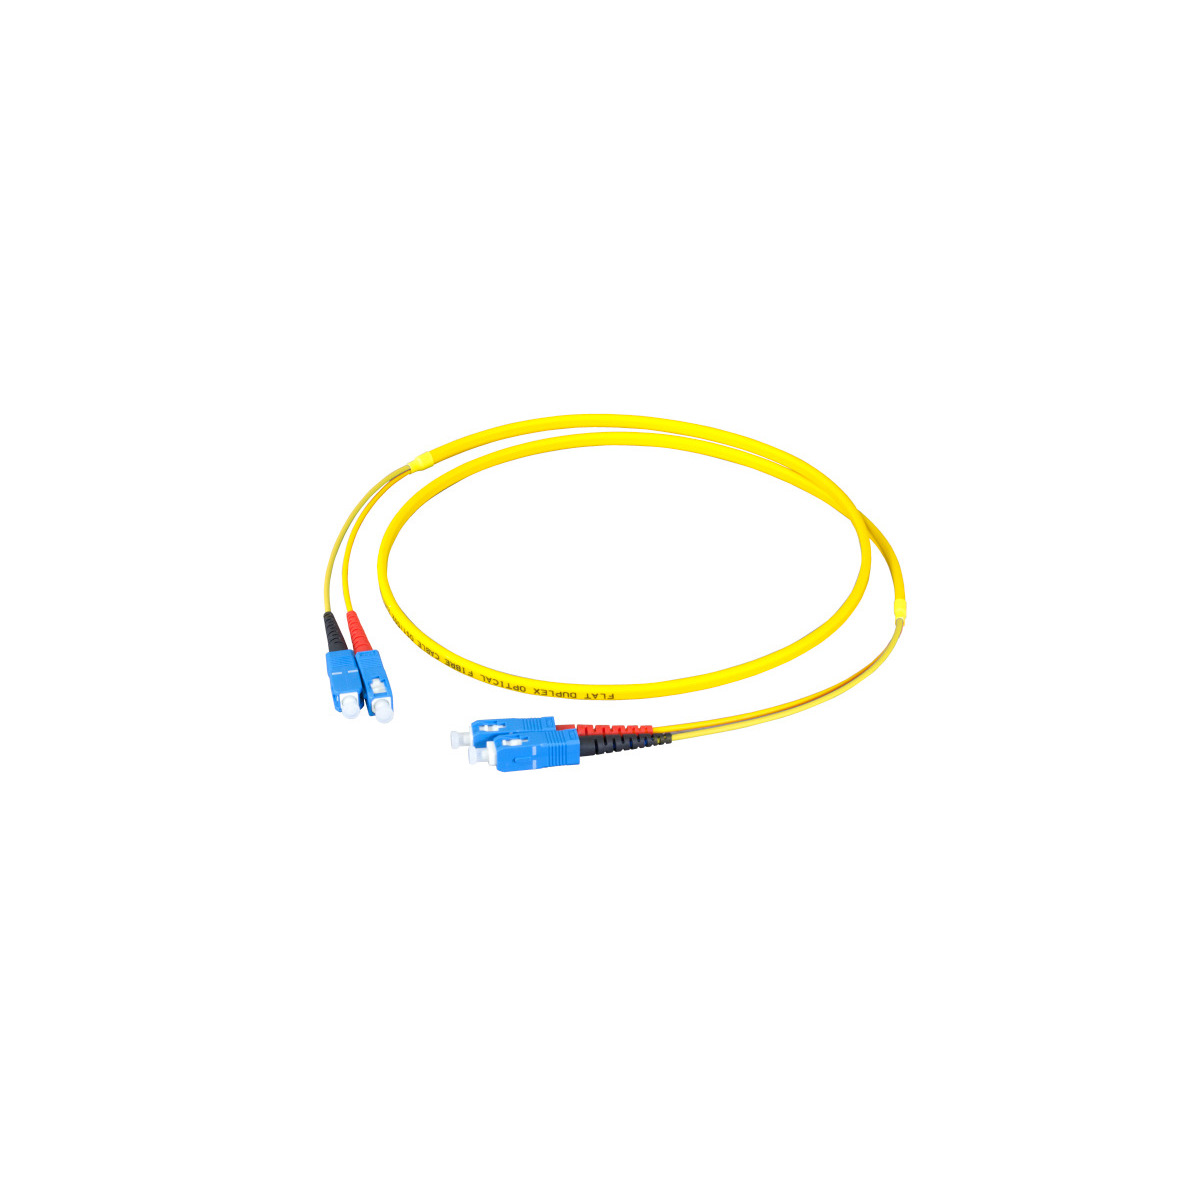 COMMUNIK Kabel m / SC, SC 3 Flachjumper Duplex Glasfaserkabel, 